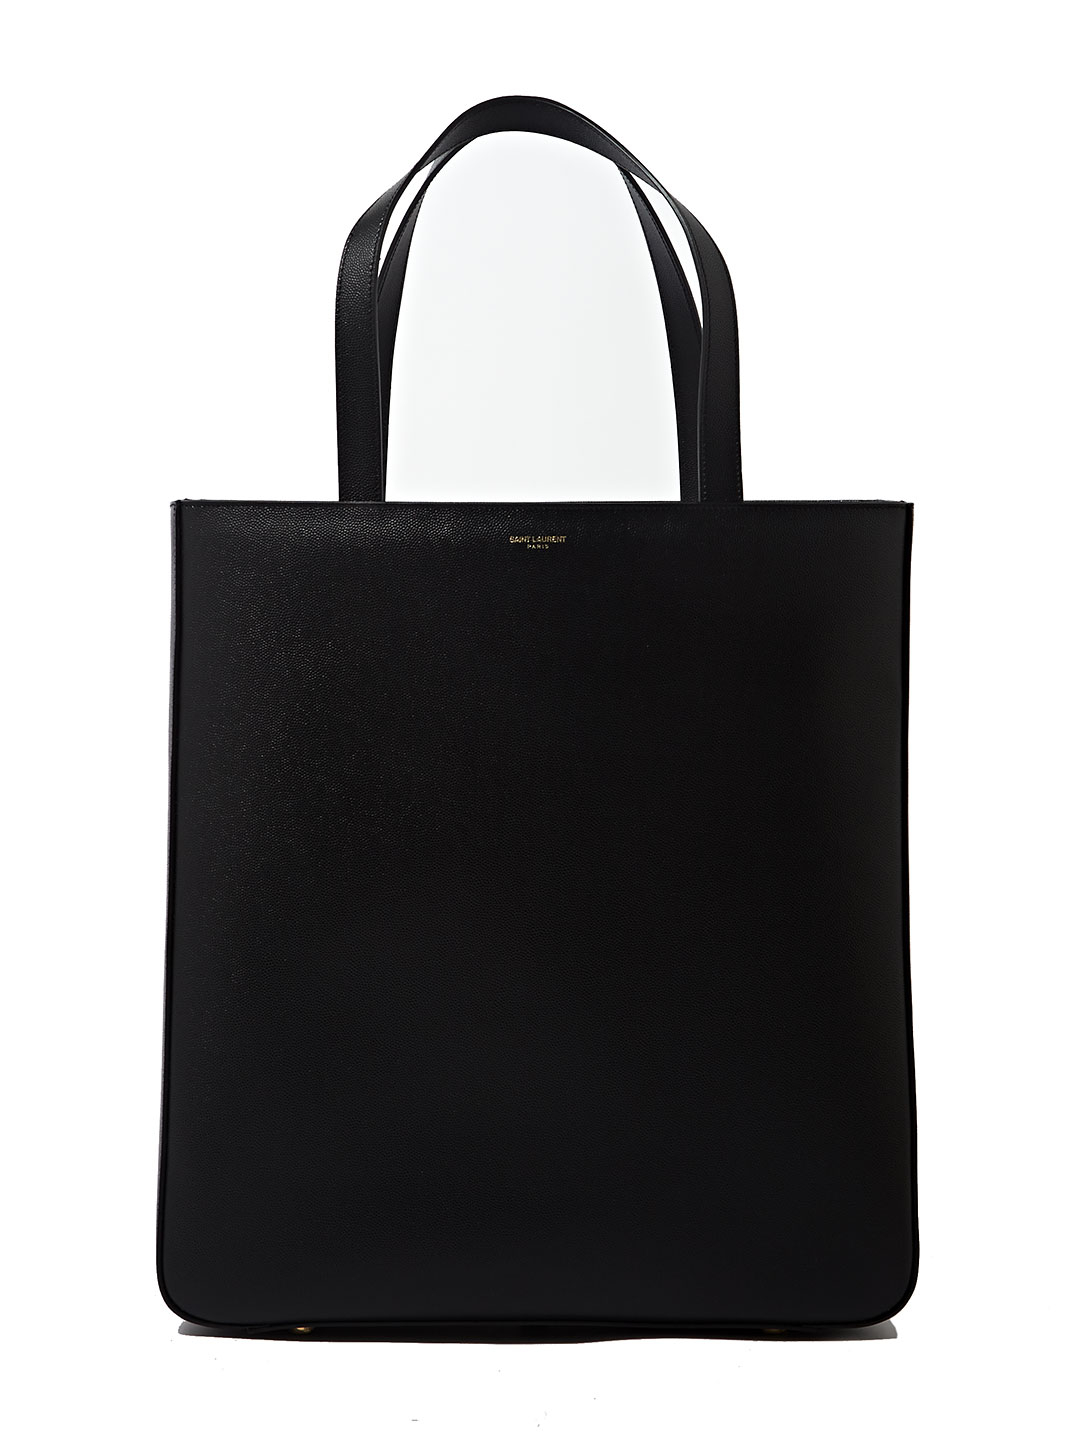 Saint Laurent Mens Grain Leather Classic Museum Tote Bag in Black for Men - Lyst